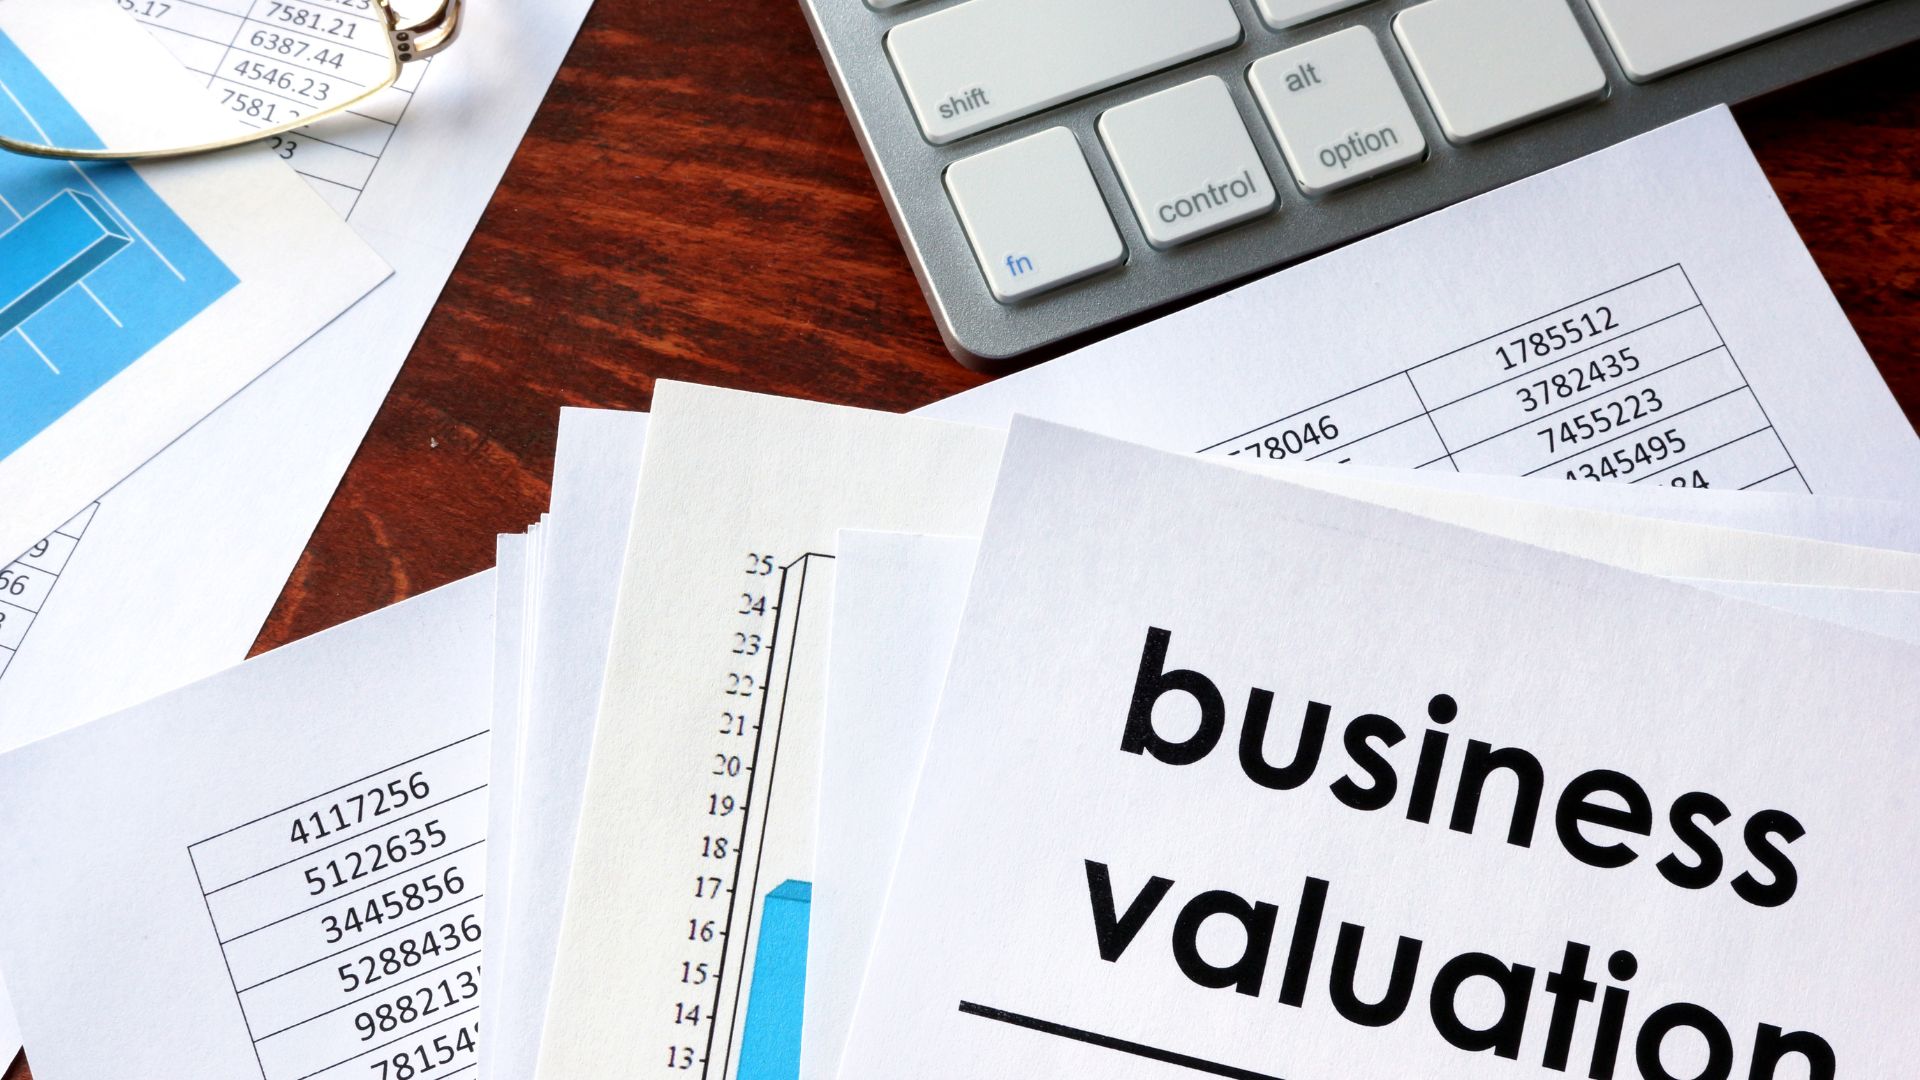 Business Valuation Course Singapore